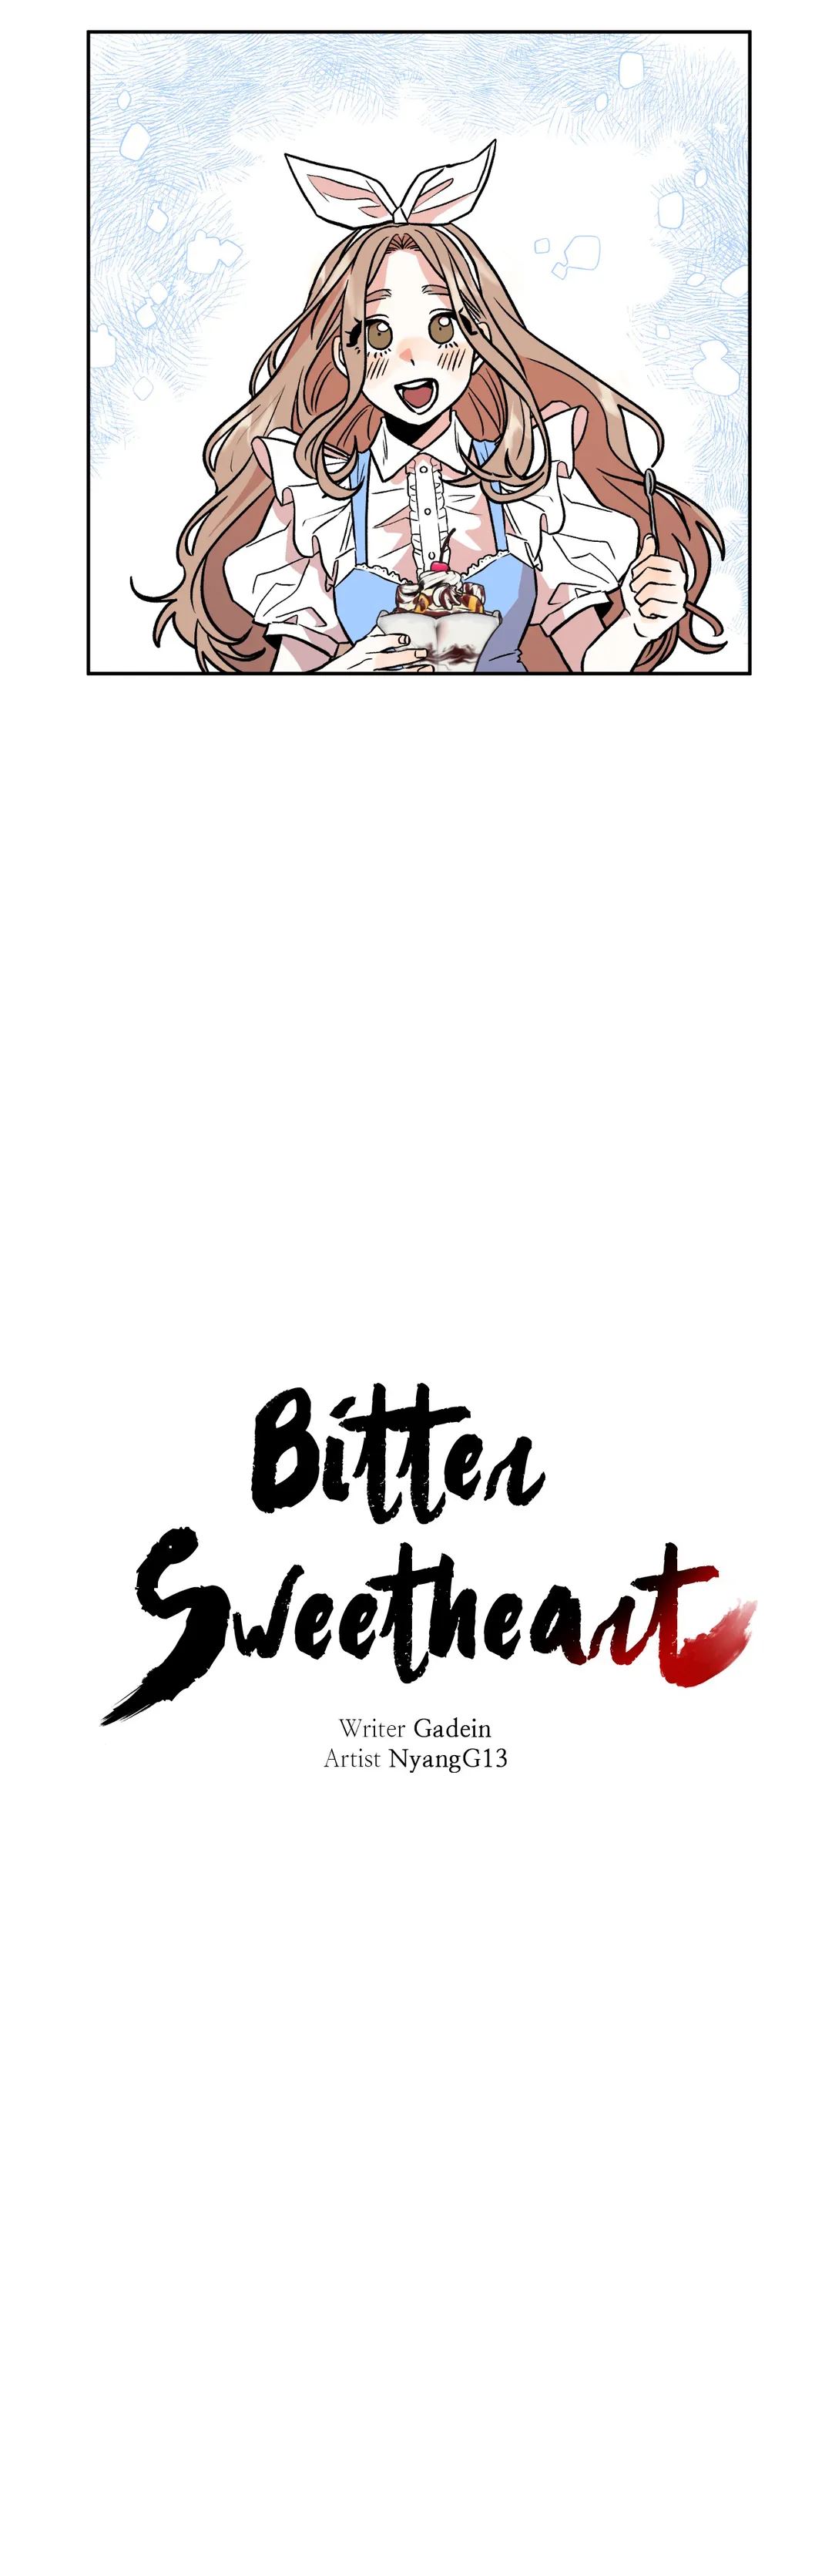 Bitter Sweetheart NEW image